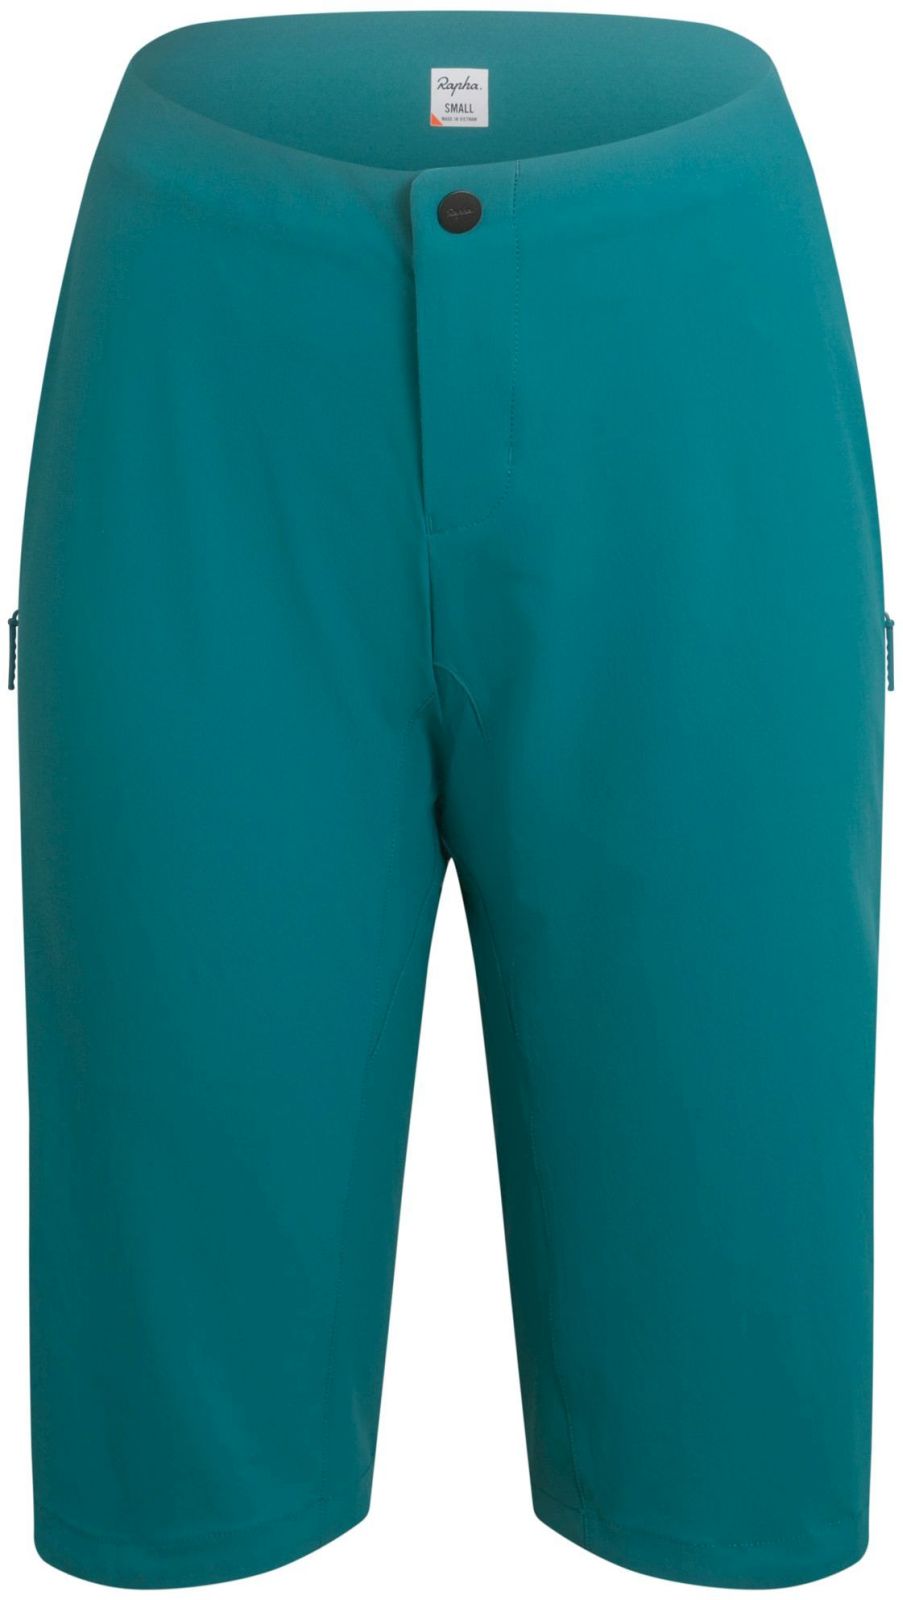 E-shop Rapha Women's Trail Shorts - blue green/egg shell S